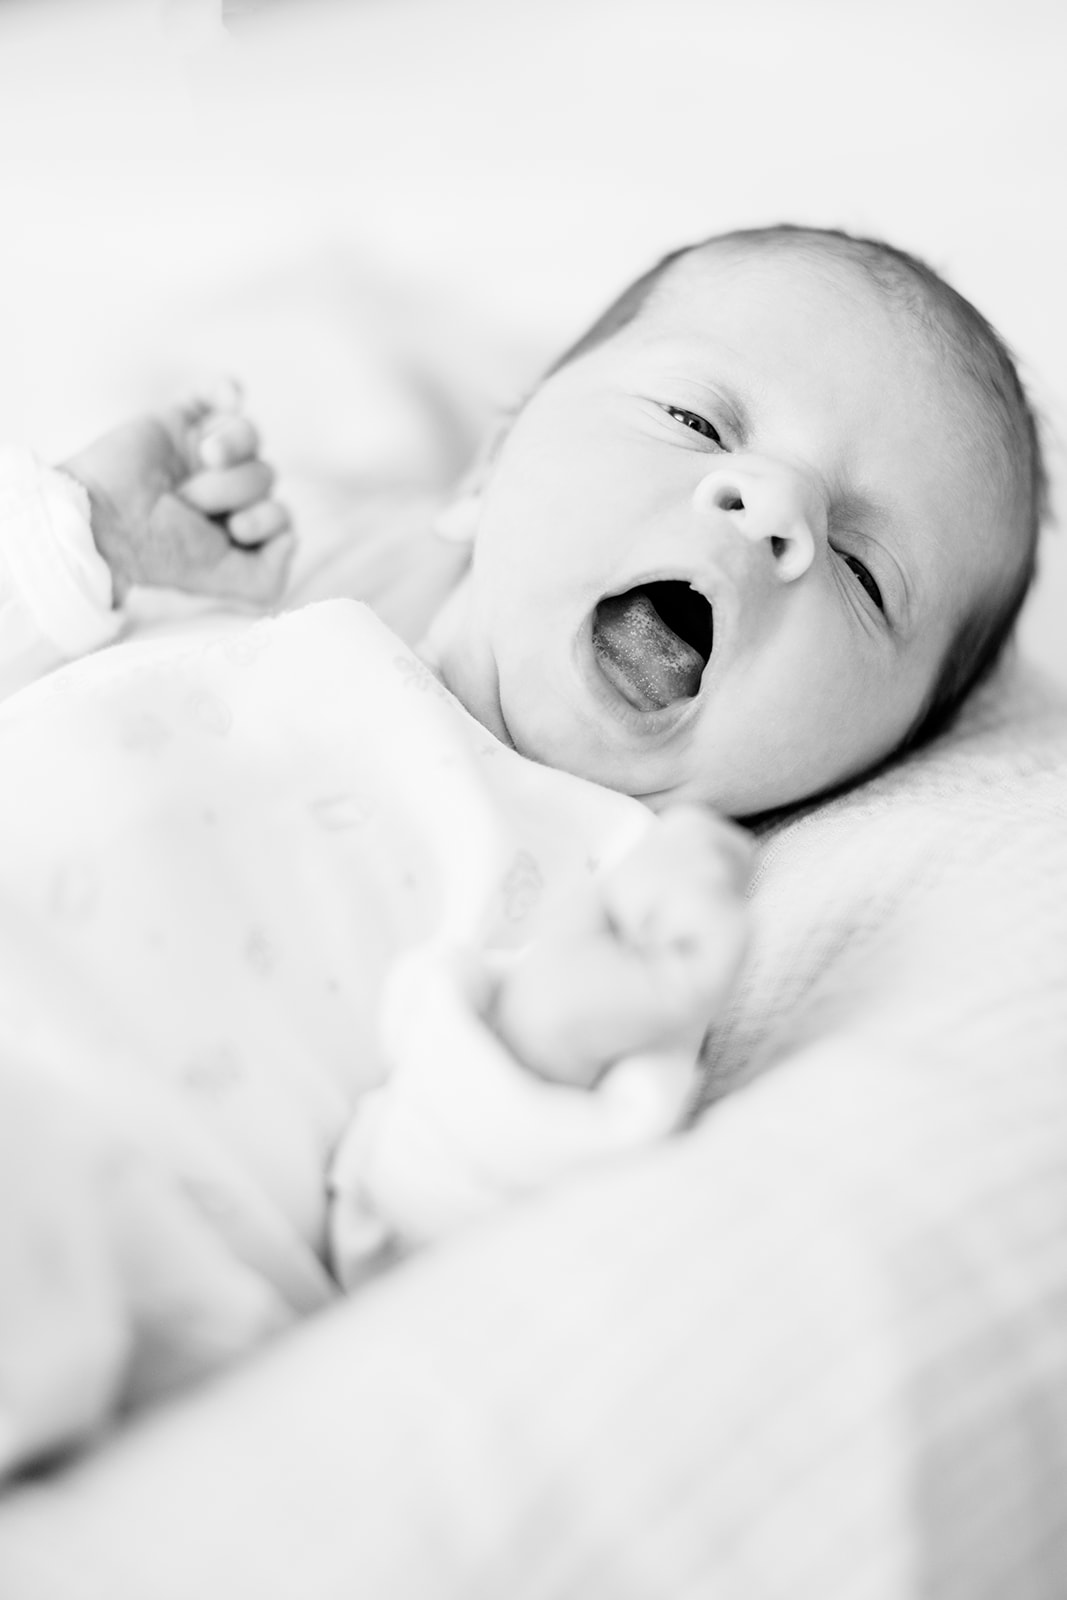 Baby Mellies Newborn Photos - Image Property of www.j-dphoto.com